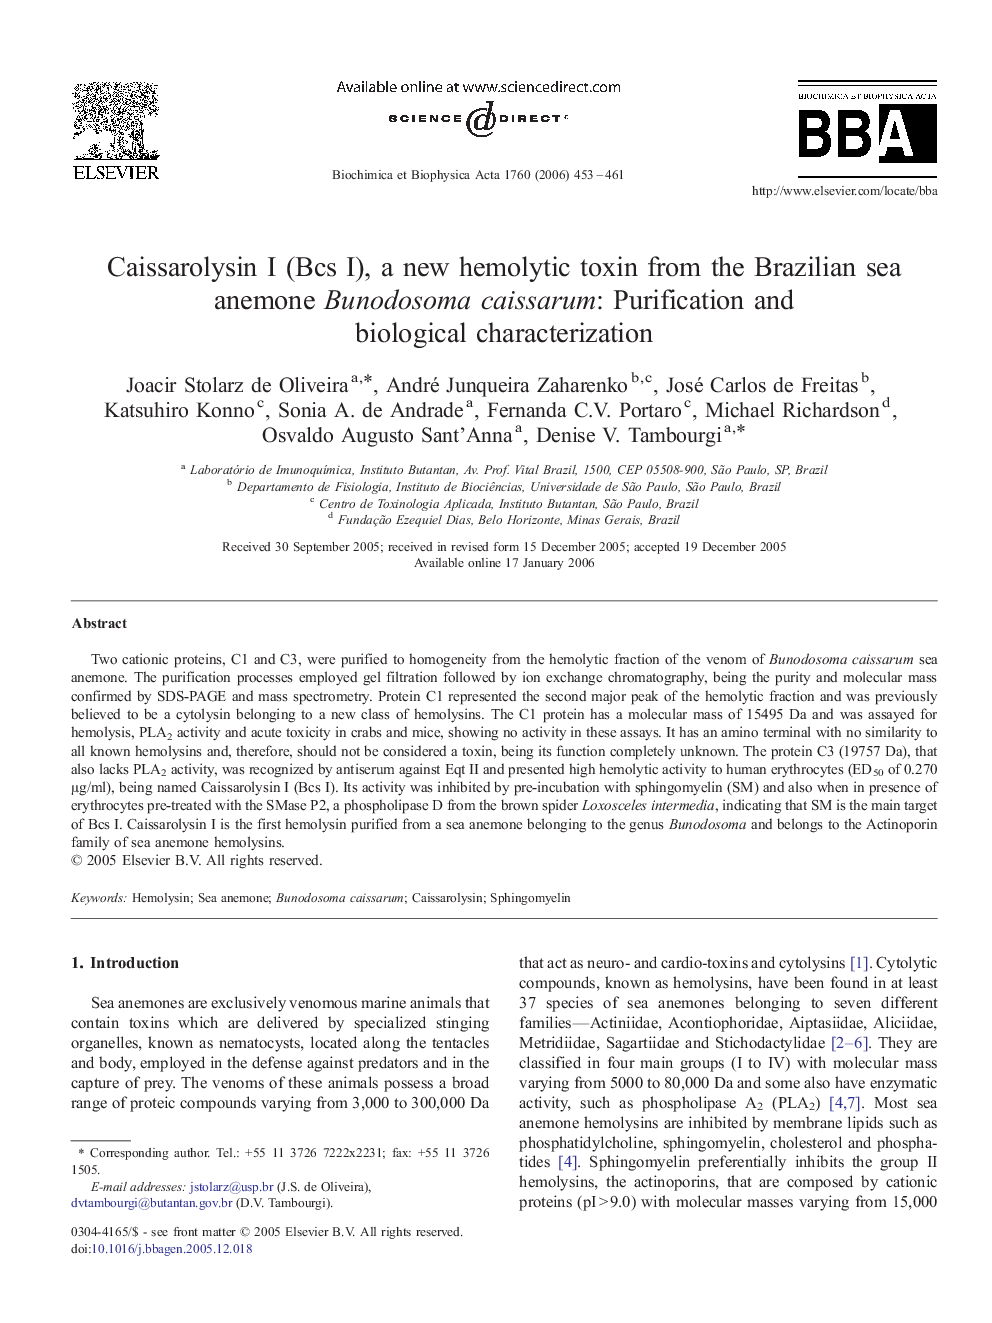 Caissarolysin I (Bcs I), a new hemolytic toxin from the Brazilian sea anemone Bunodosoma caissarum: Purification and biological characterization